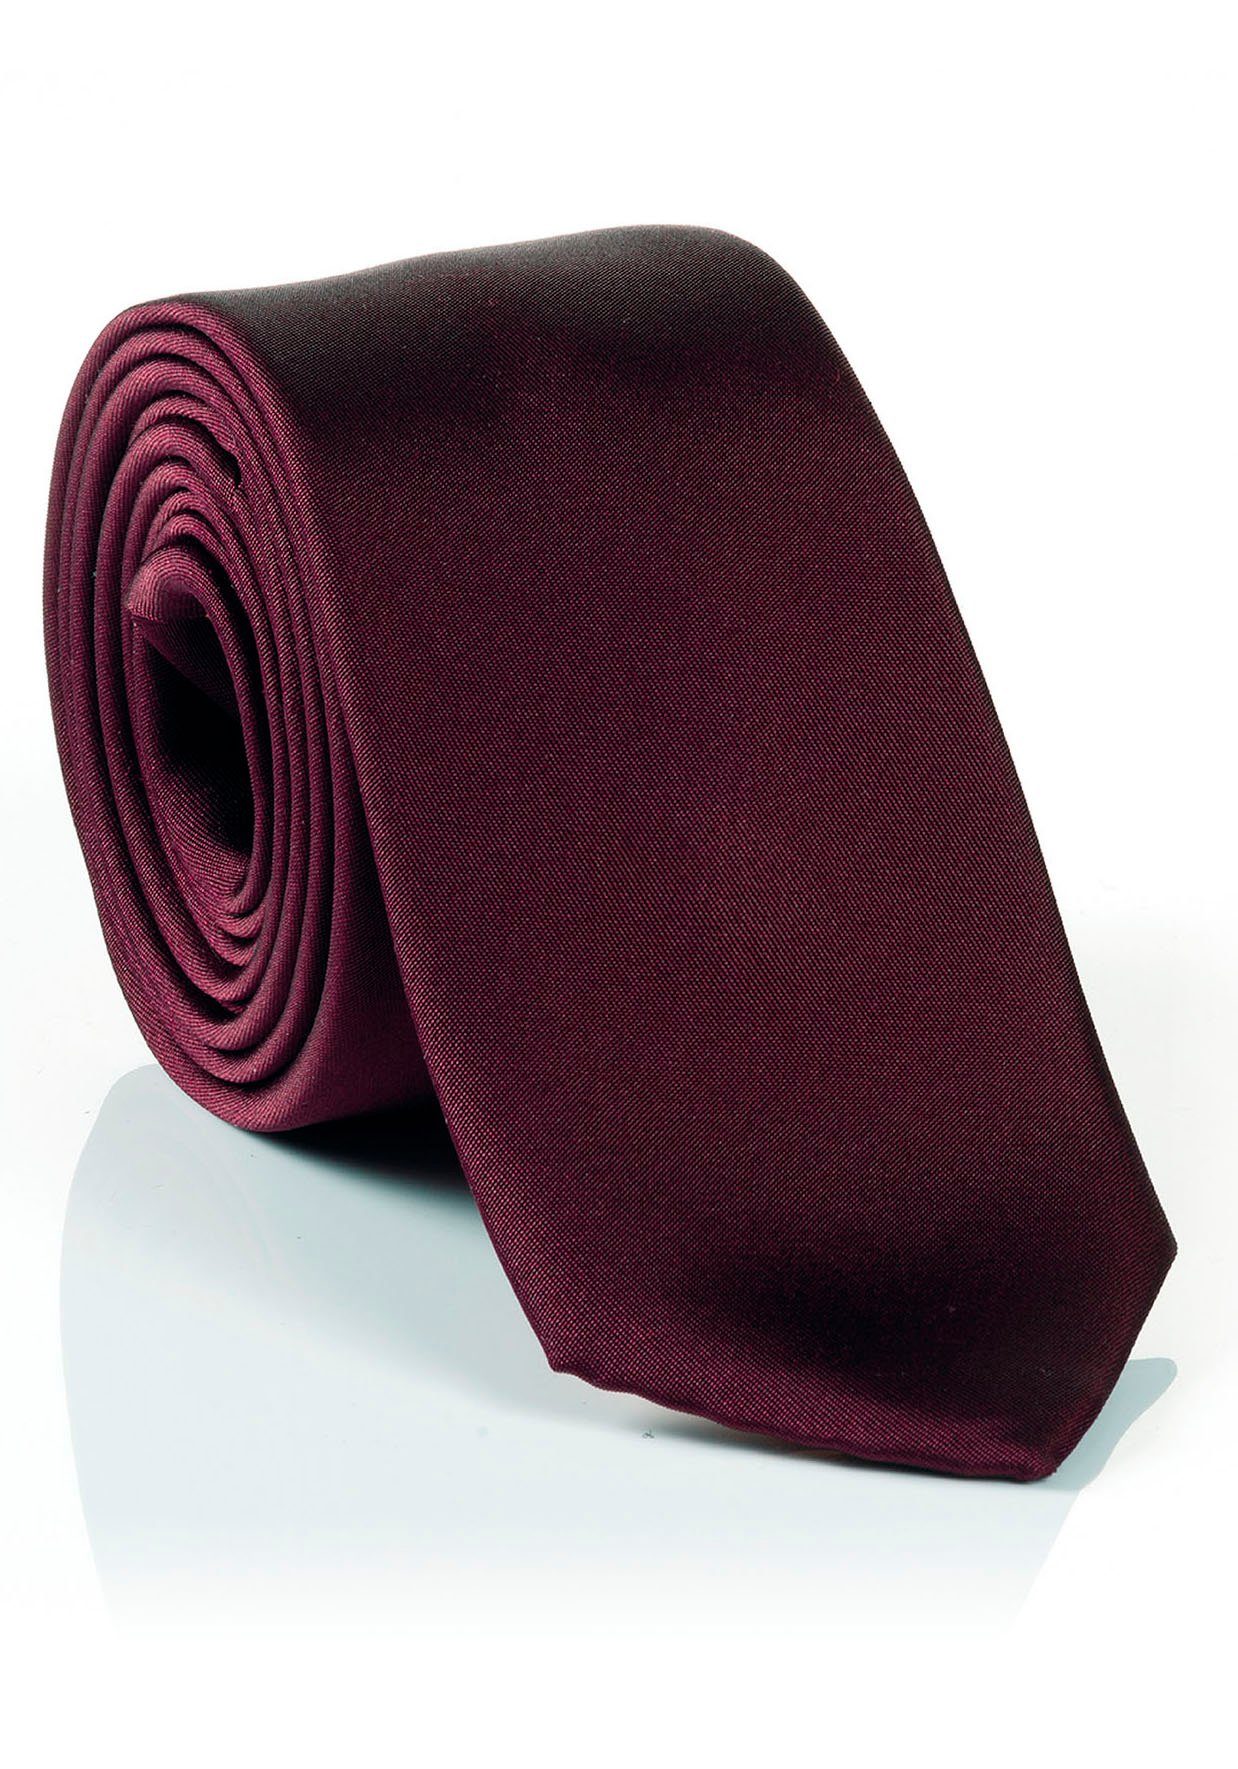 MONTI Krawatte aus bordeaux Seide, reiner Uni-Pastellfarben